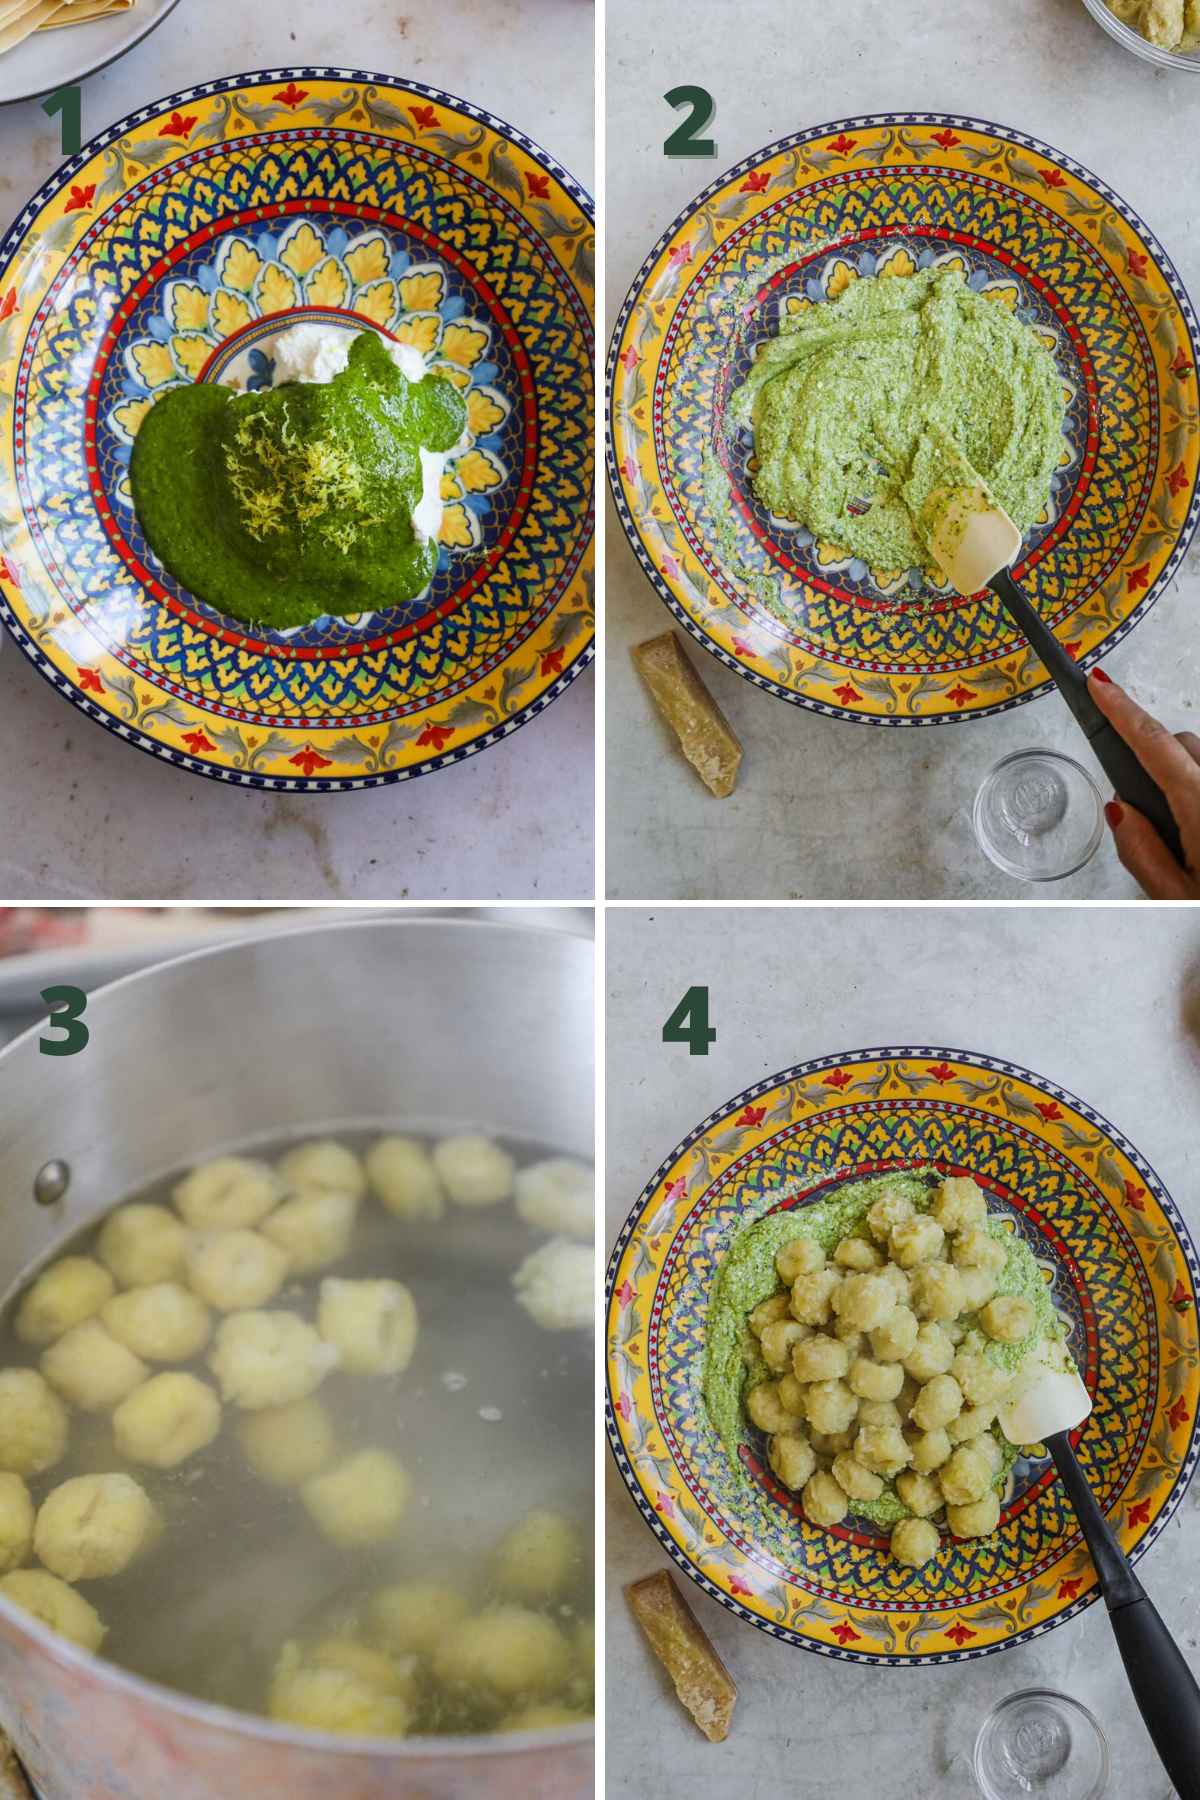 Steps to make gnocchi al pesto (creamy pesto gnocchi), mixing ricotta, pesto, lemon juice, and zest, boiling gnocchi, and mixing gnocchi in pesto sauce.